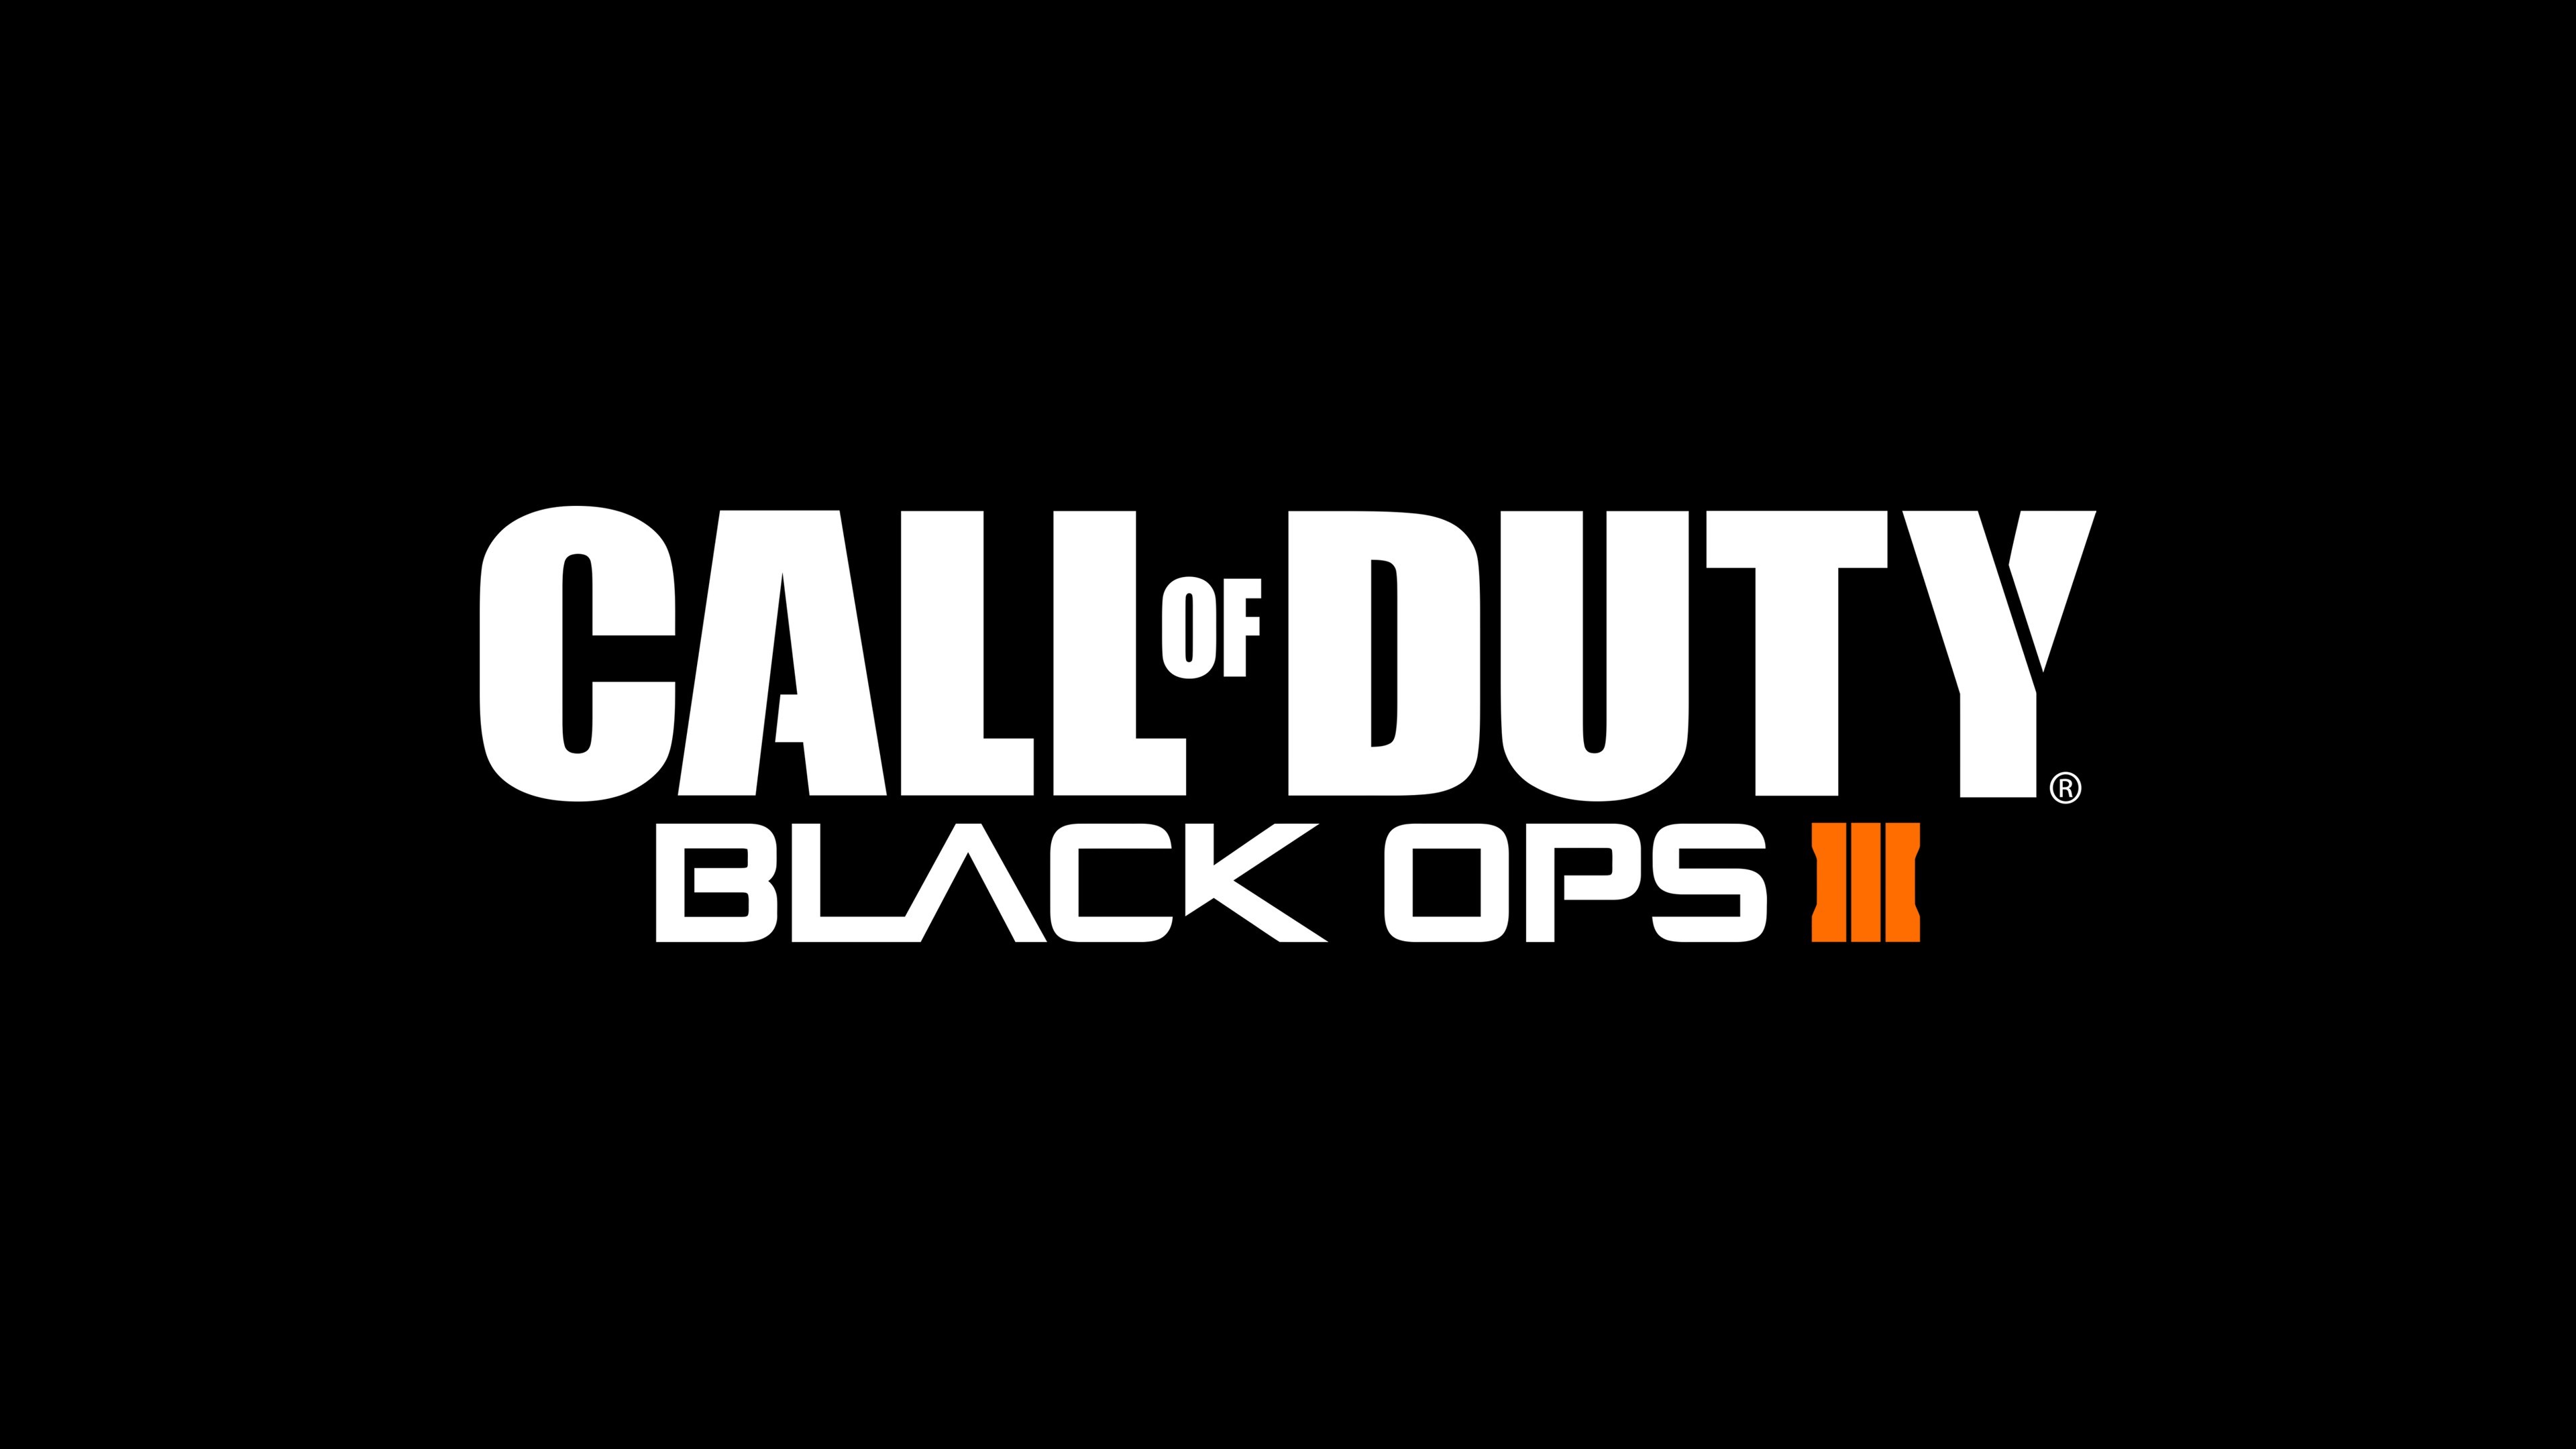 … Call of Duty: Black Ops III Wallpaper …